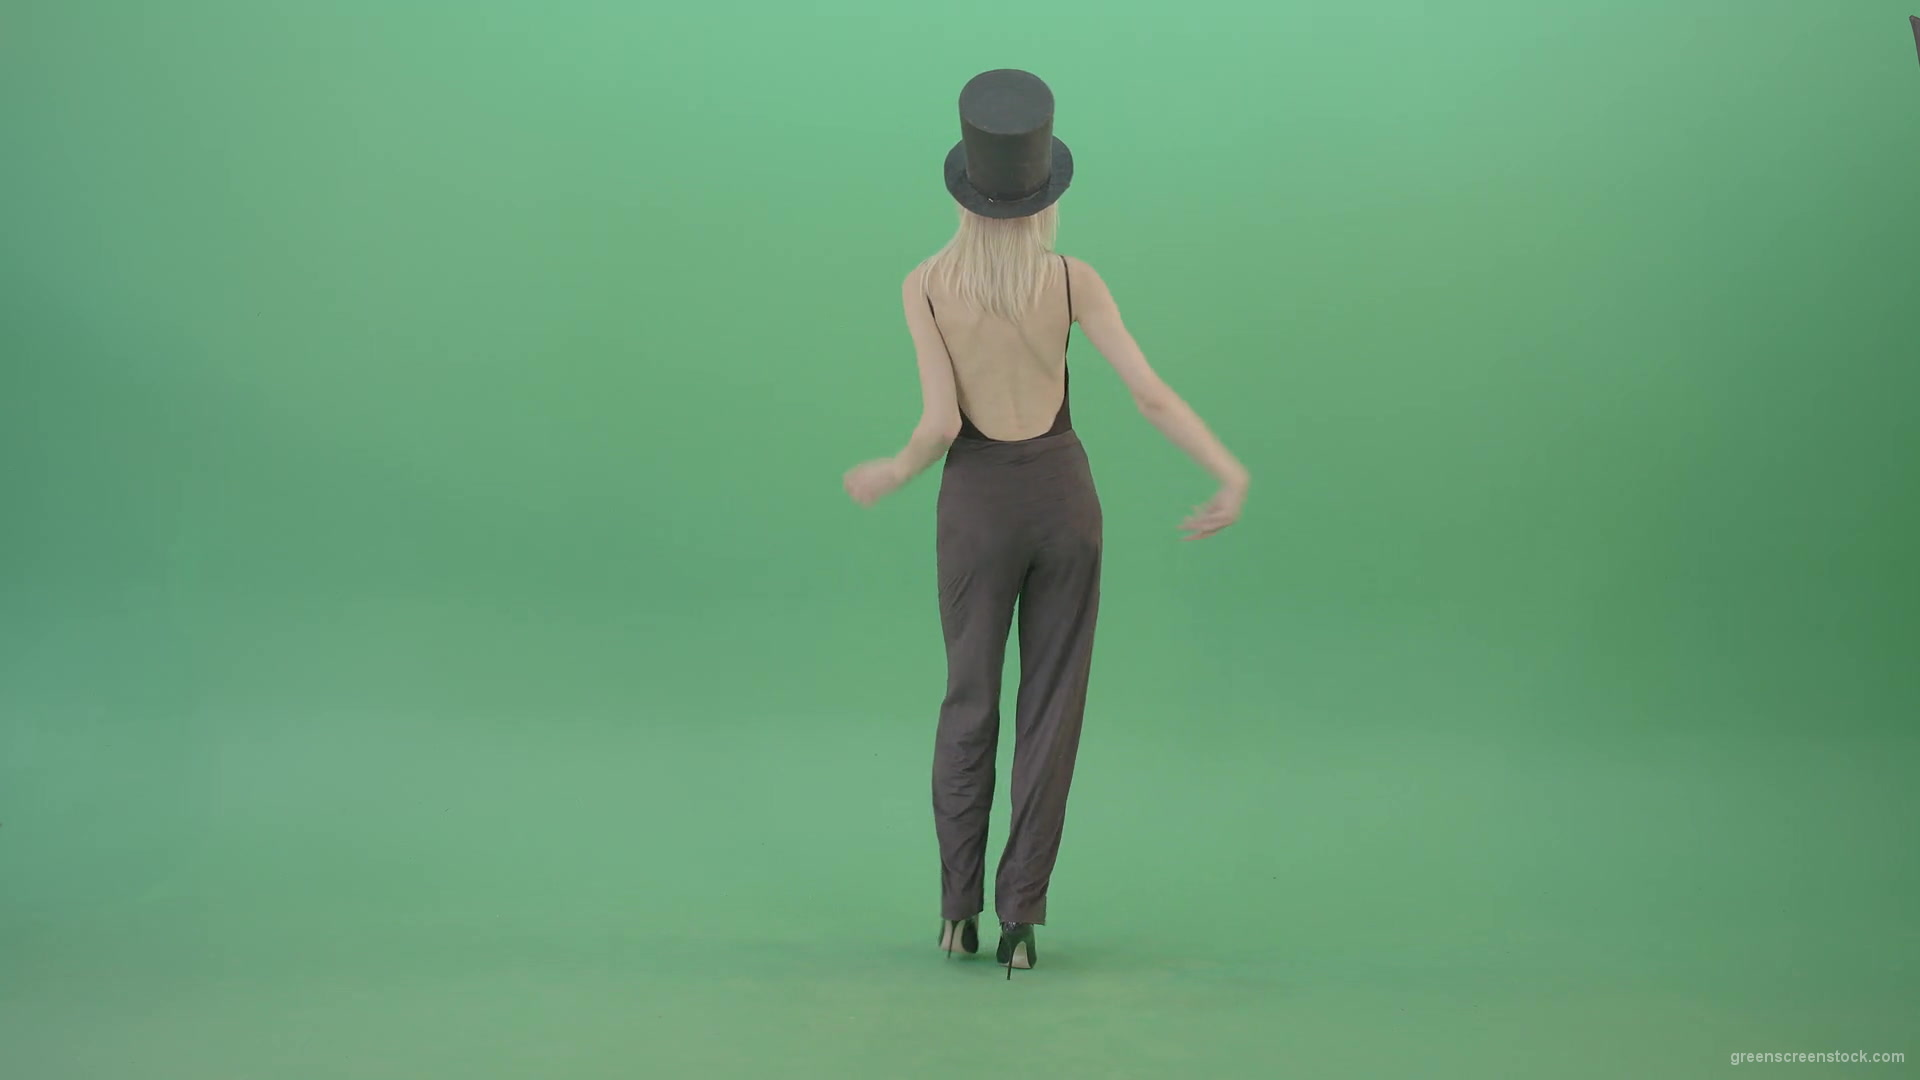 Blonde-Girl-in-Black-Cylinder-Hat-dancing-slowly-in-Corona-VIrus-Mask-on-green-screen-VIdeo-Footage-1920_006 Green Screen Stock